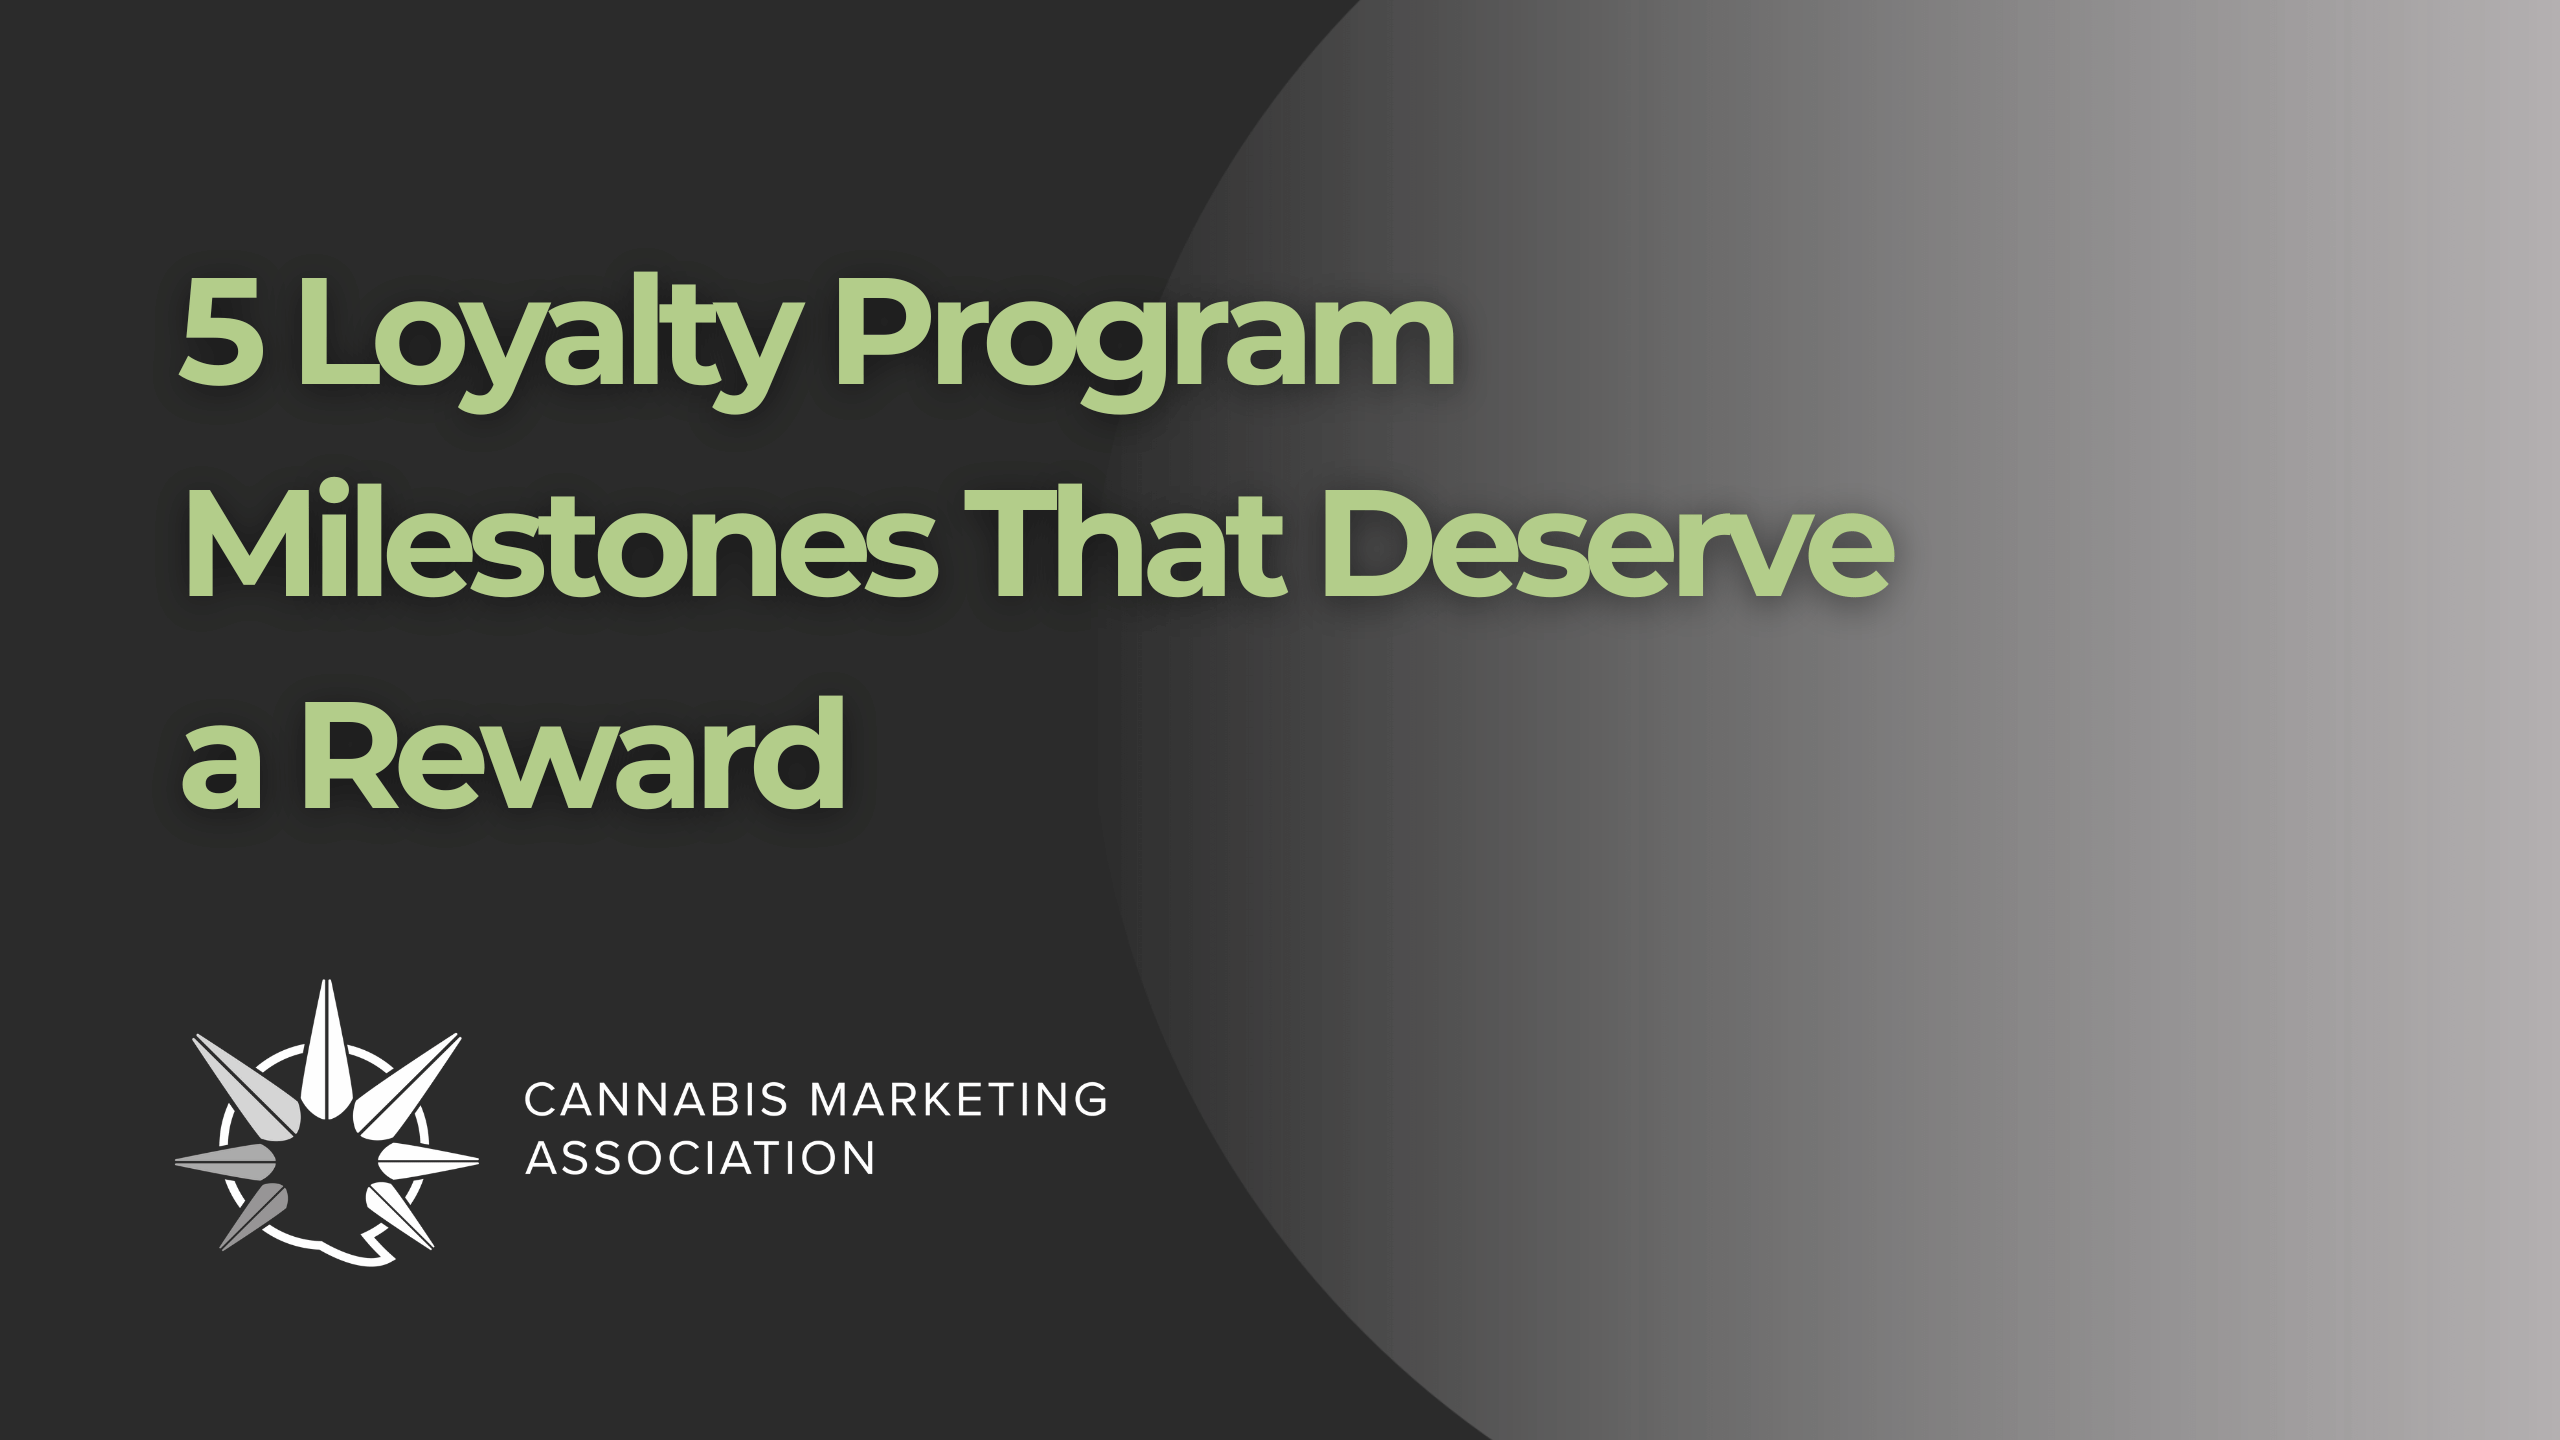 5 Loyalty Program Milestones That Deserve a Reward